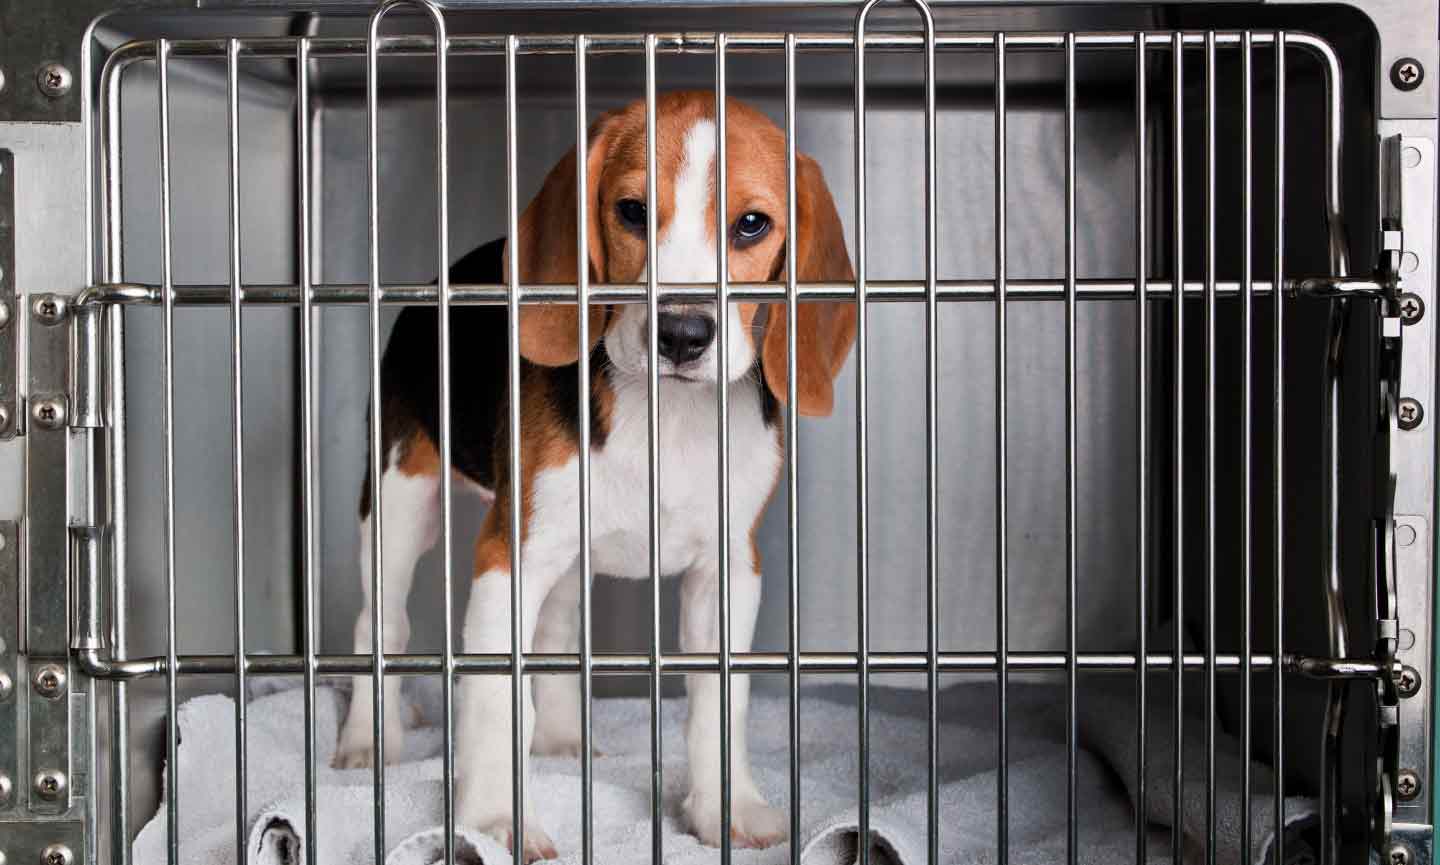 A dog inside a metal kennel